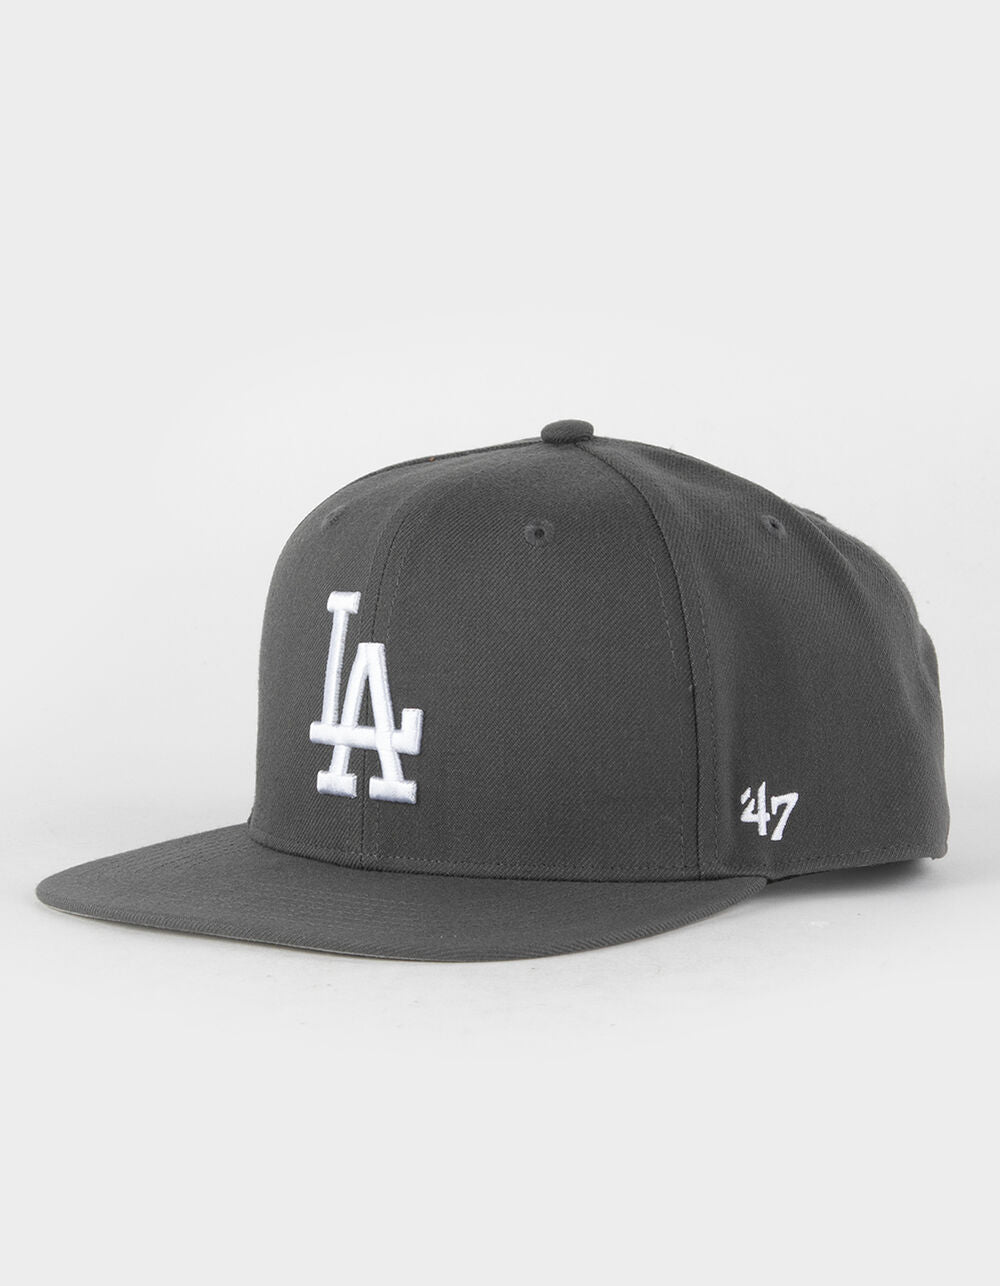 LA Dodgers '47 Captain Snapback Hat - Grey